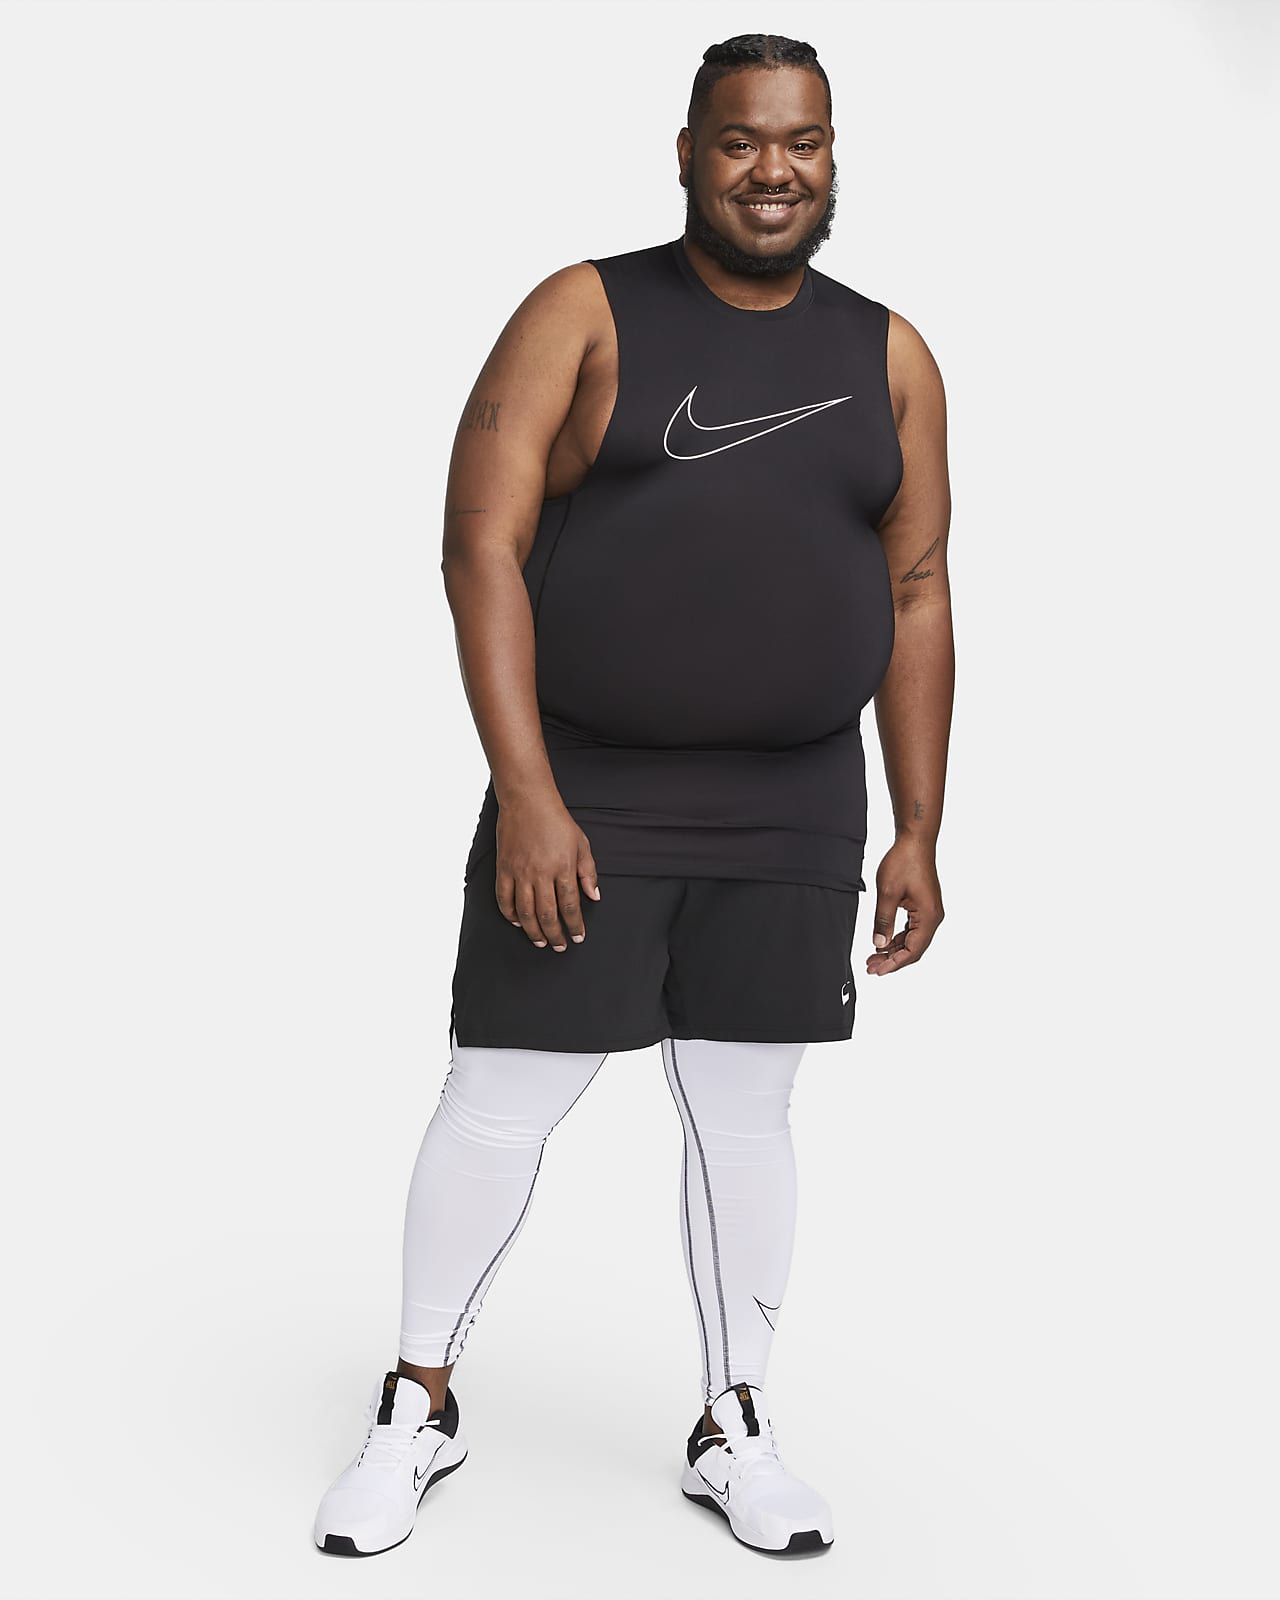 Nike Pro Dri-FIT Men's Tight Fit Sleeveless Top.